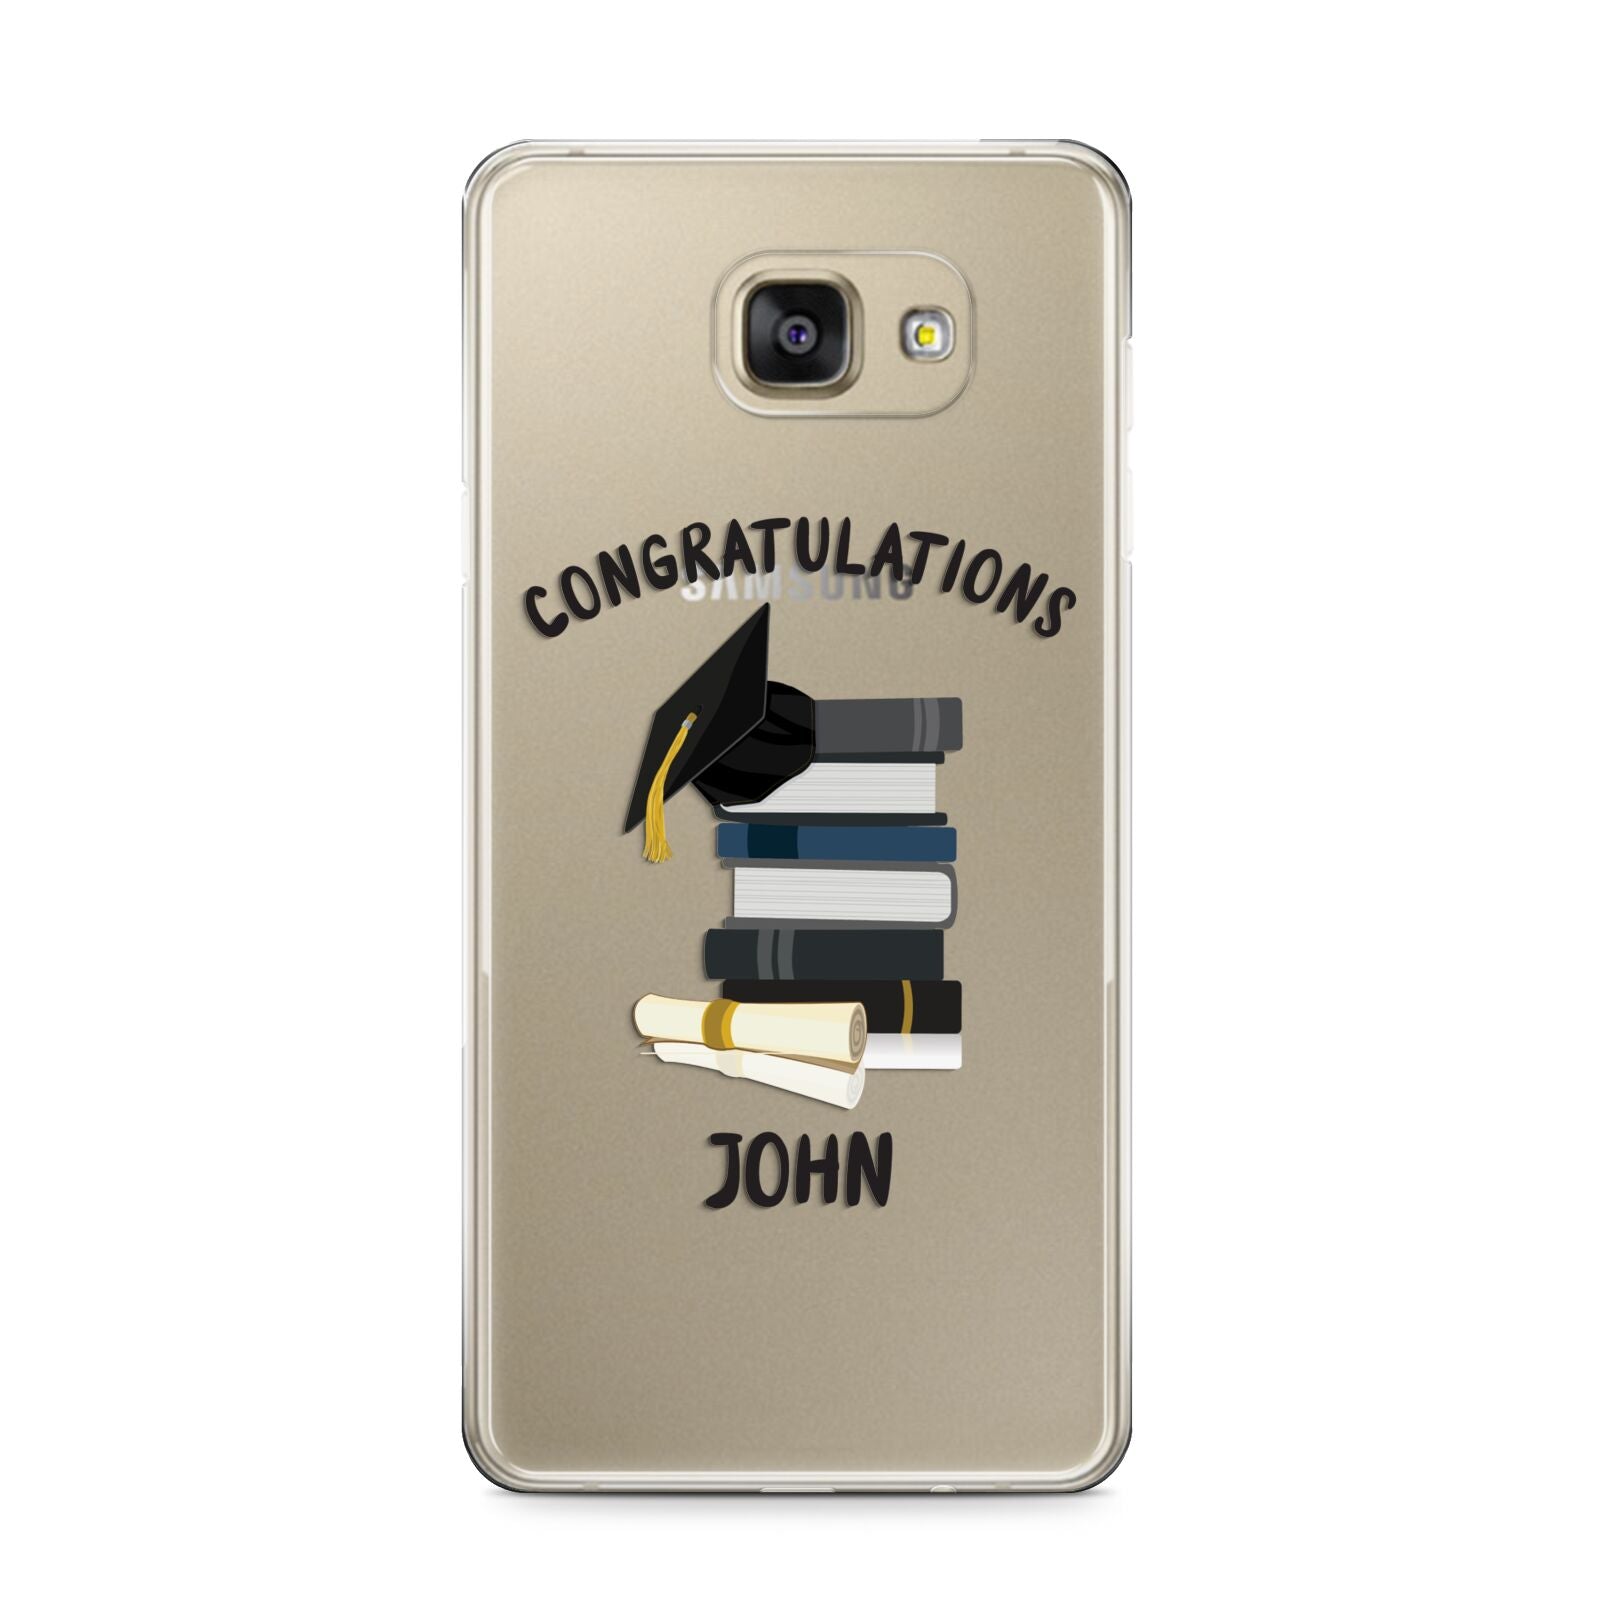 Congratulations Graduate Samsung Galaxy A9 2016 Case on gold phone